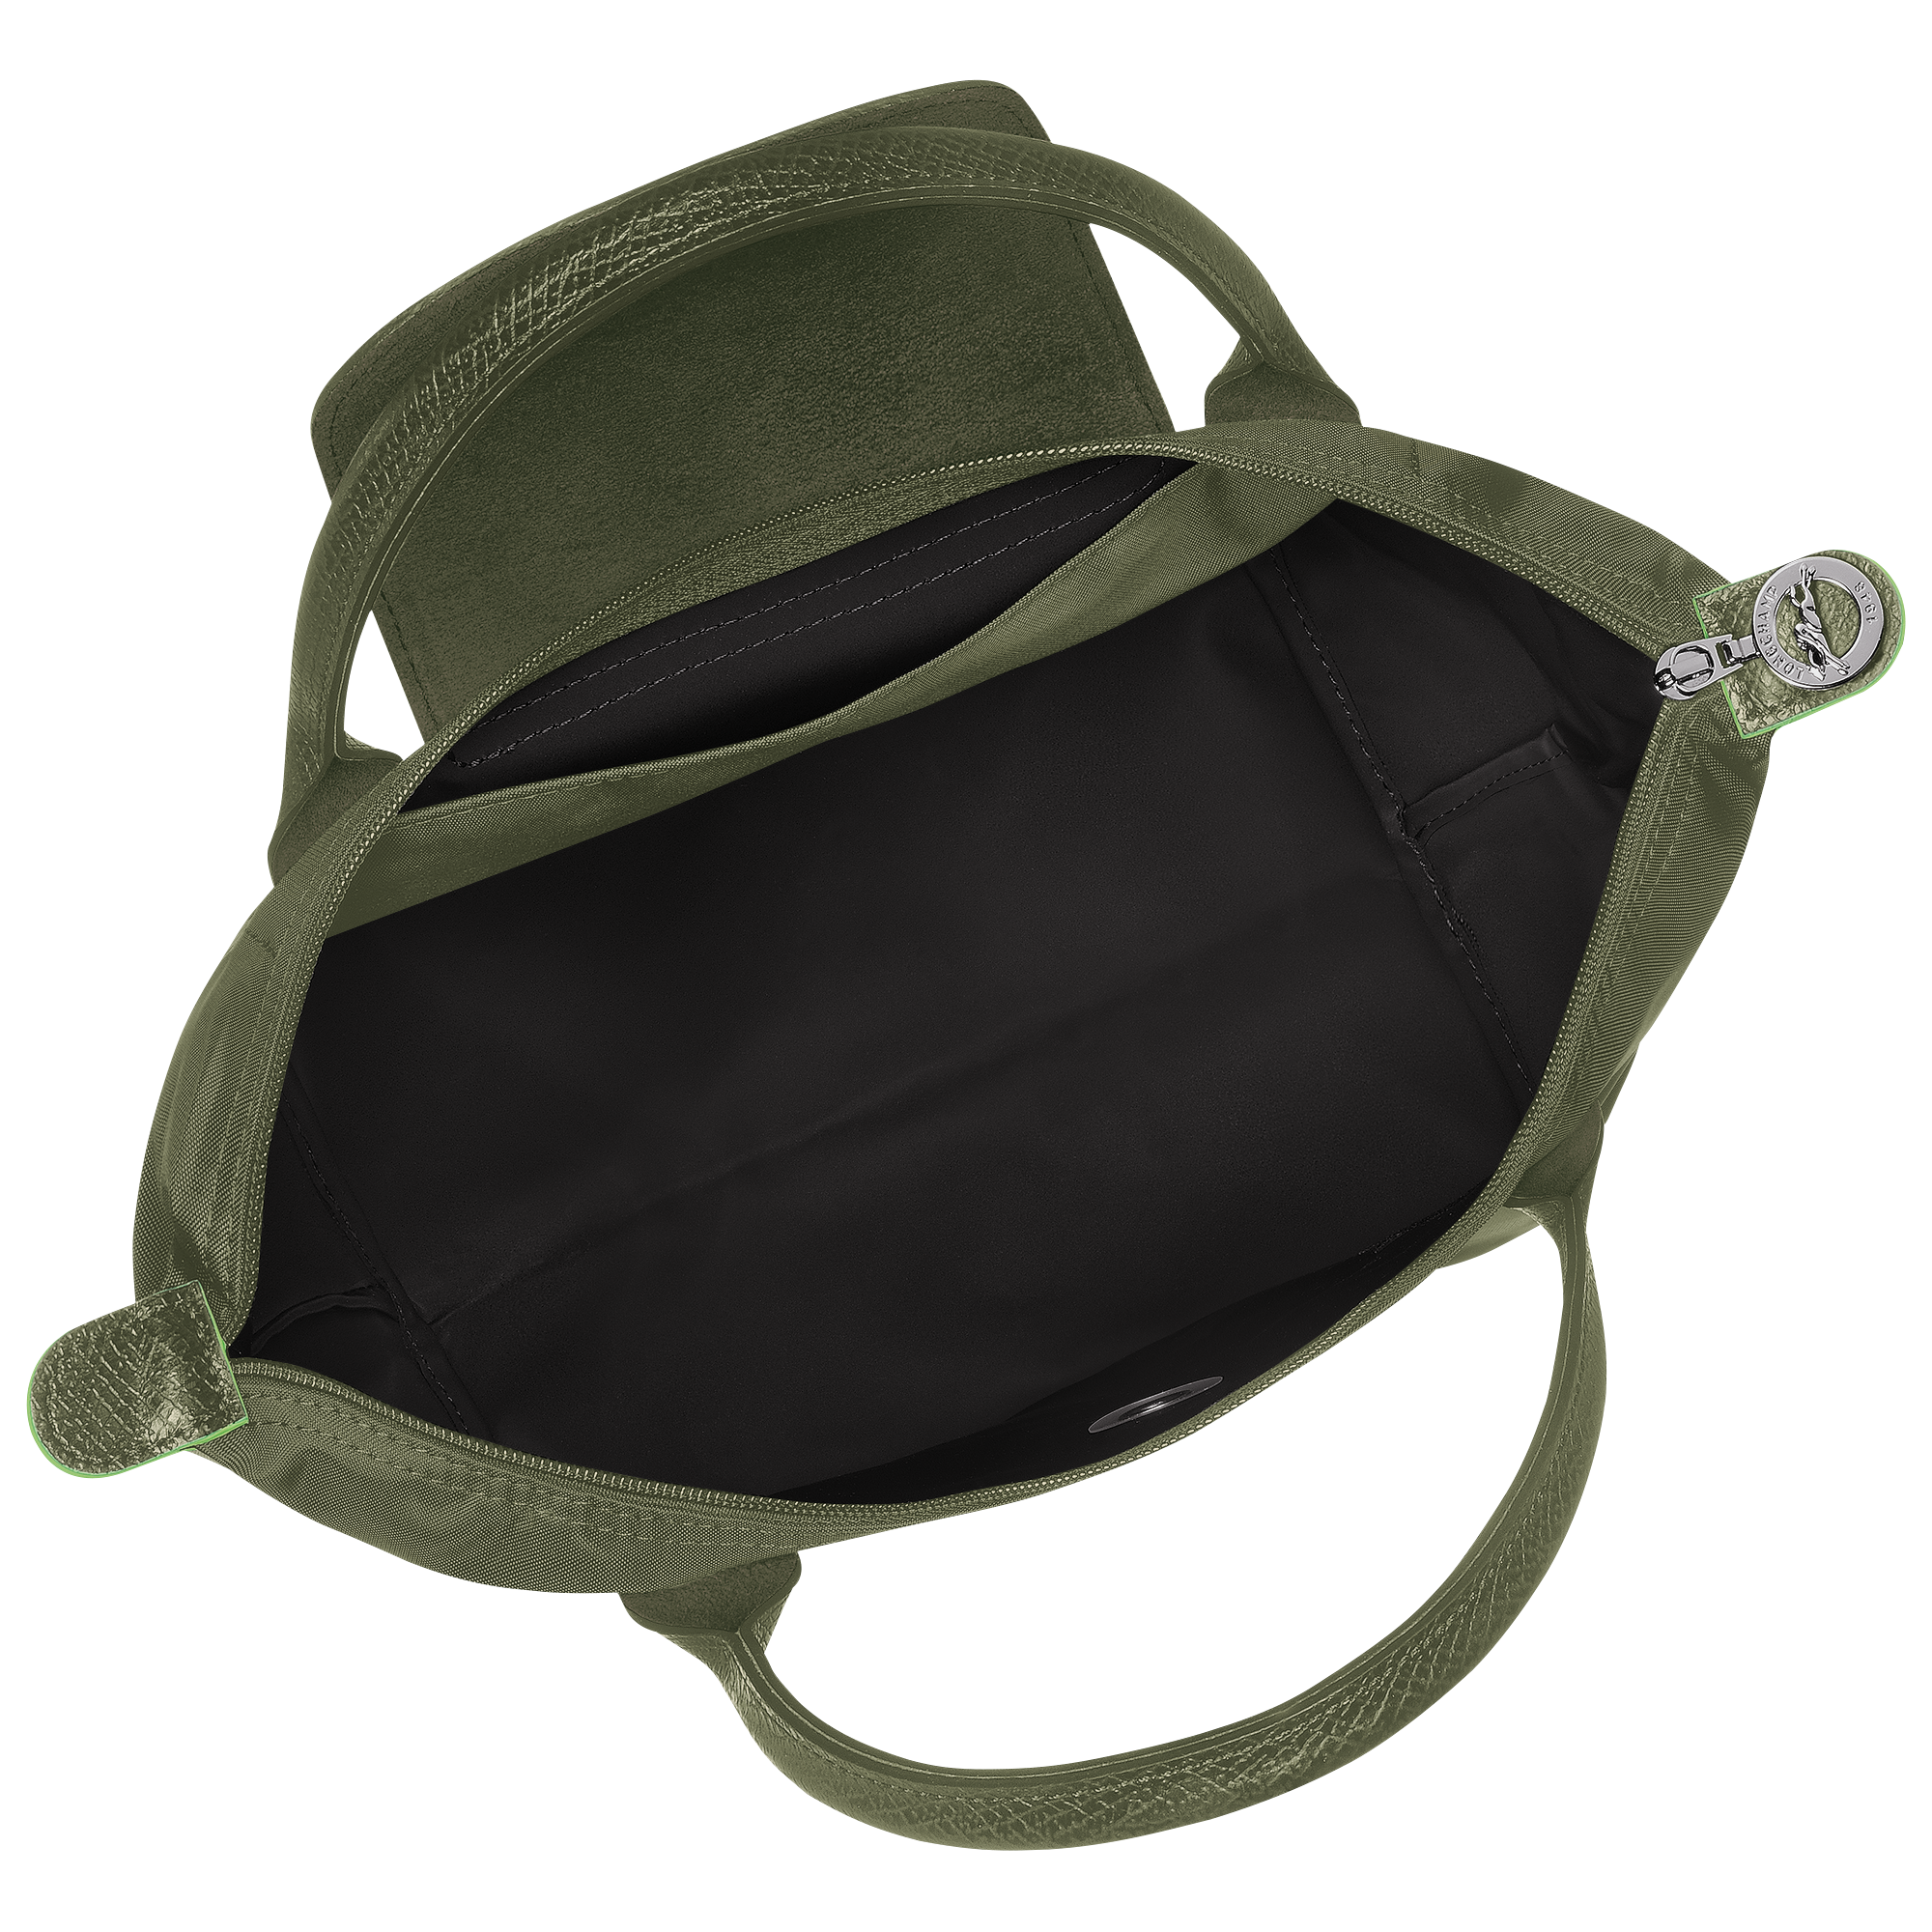 Le Pliage Green Handbag S, Forest